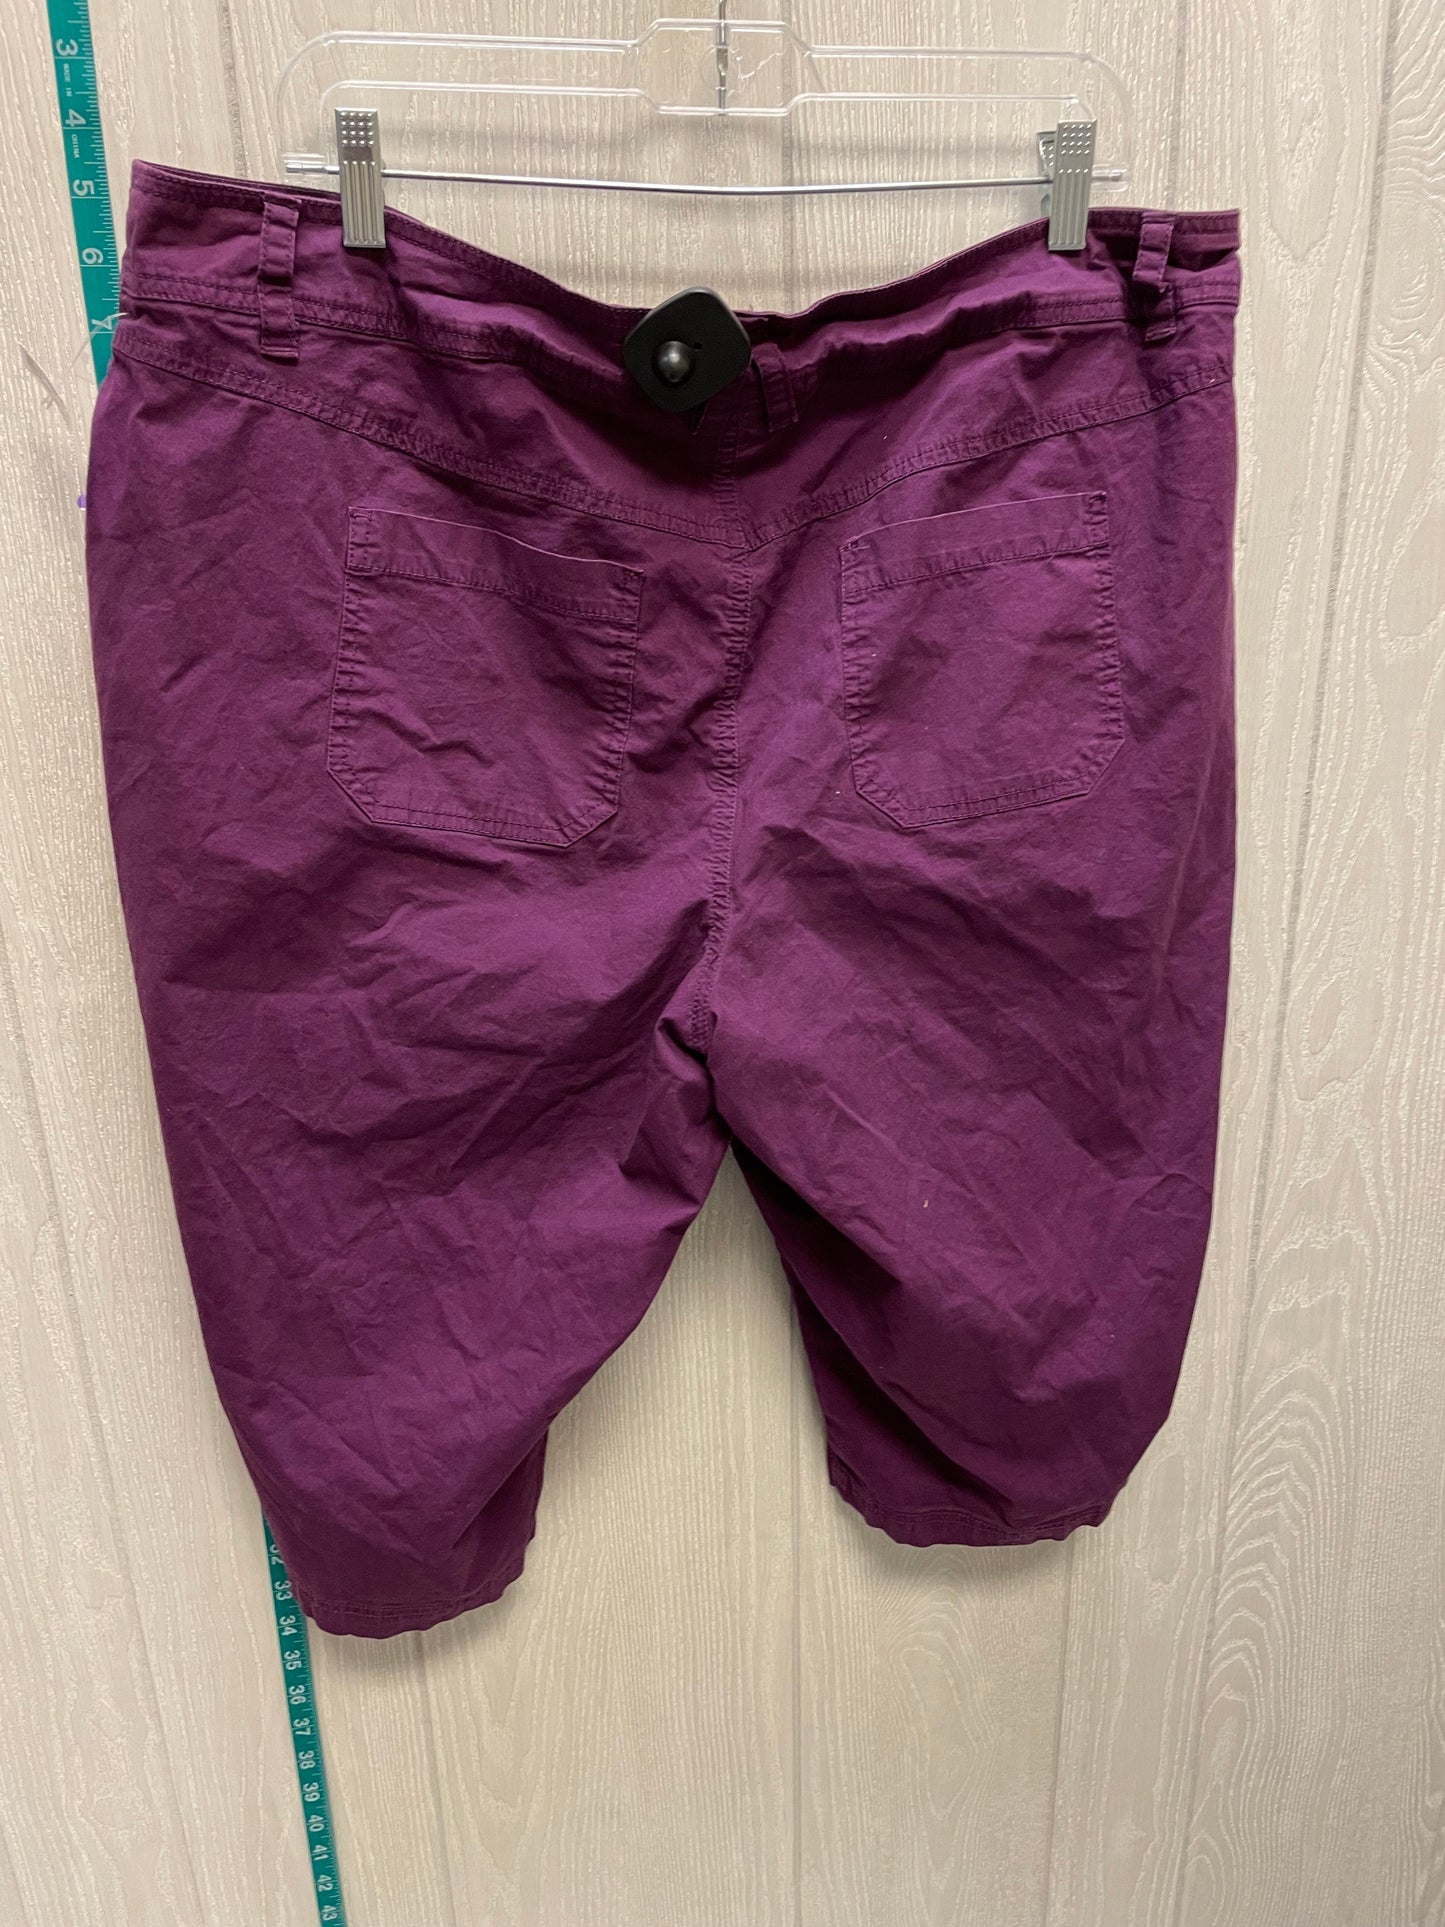 Purple Shorts Lane Bryant, Size 20